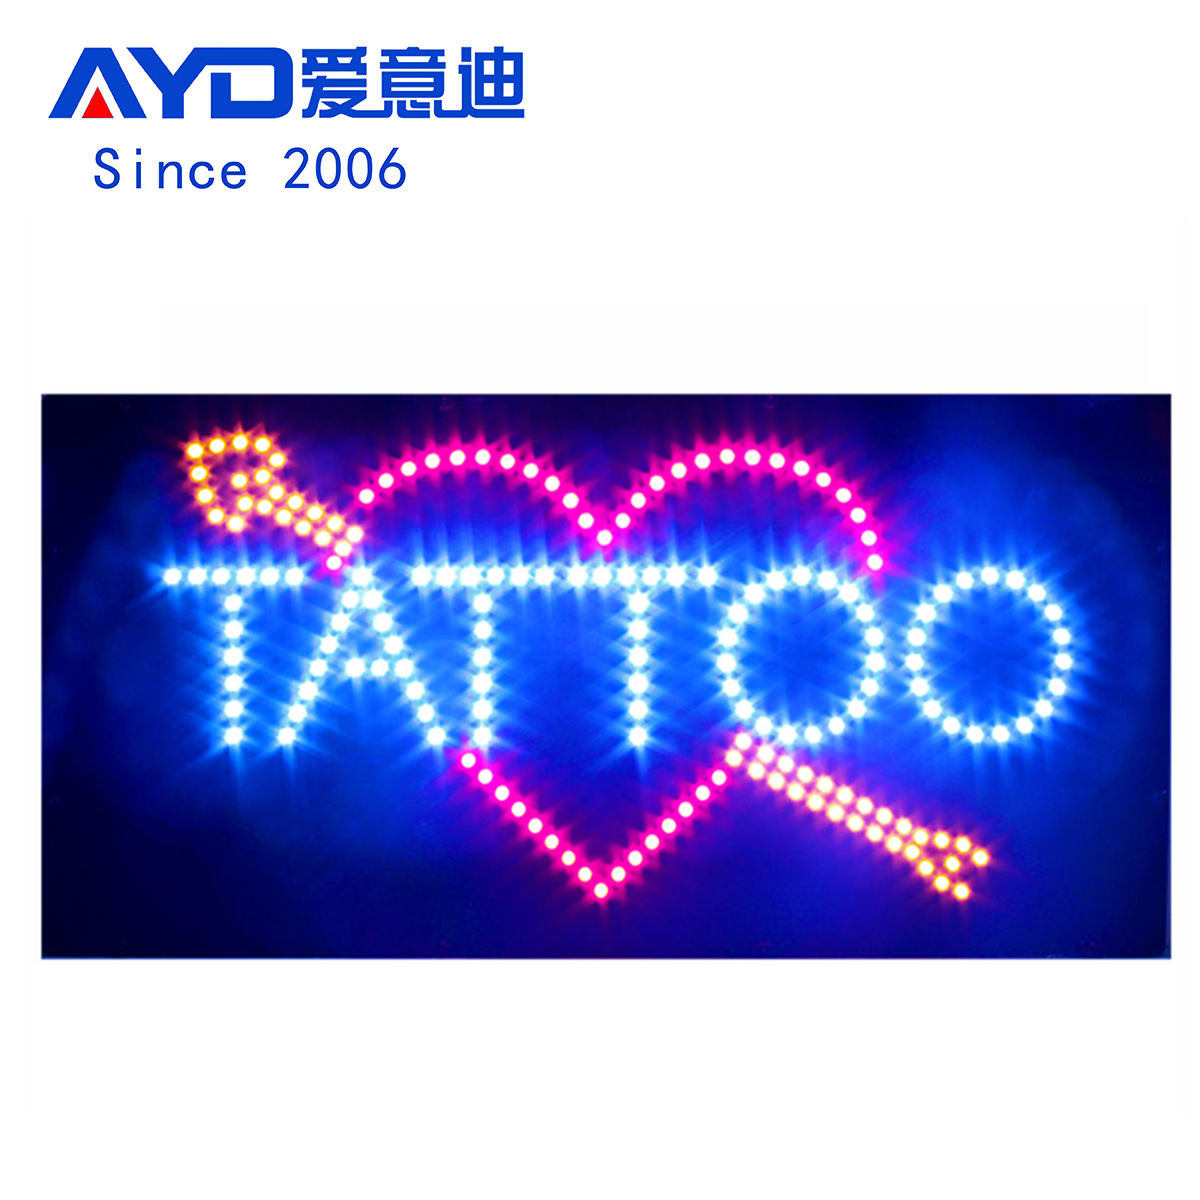 LED TATTOO Sign-HST0504